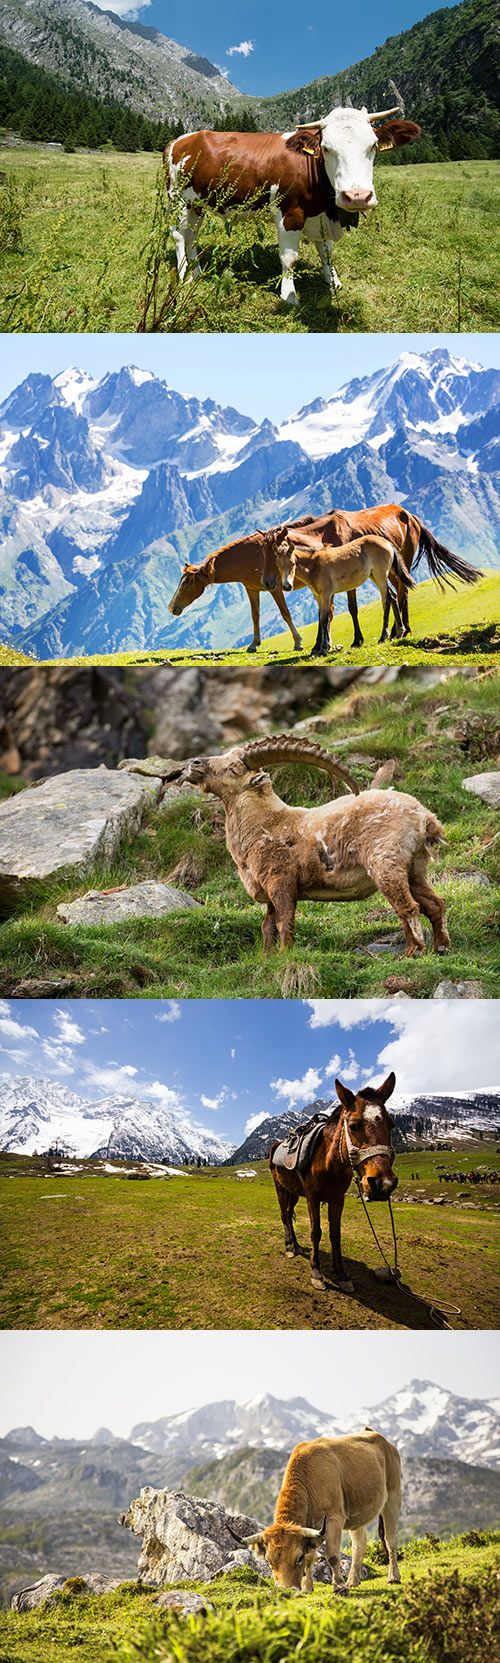 Photos - Animals in mountains